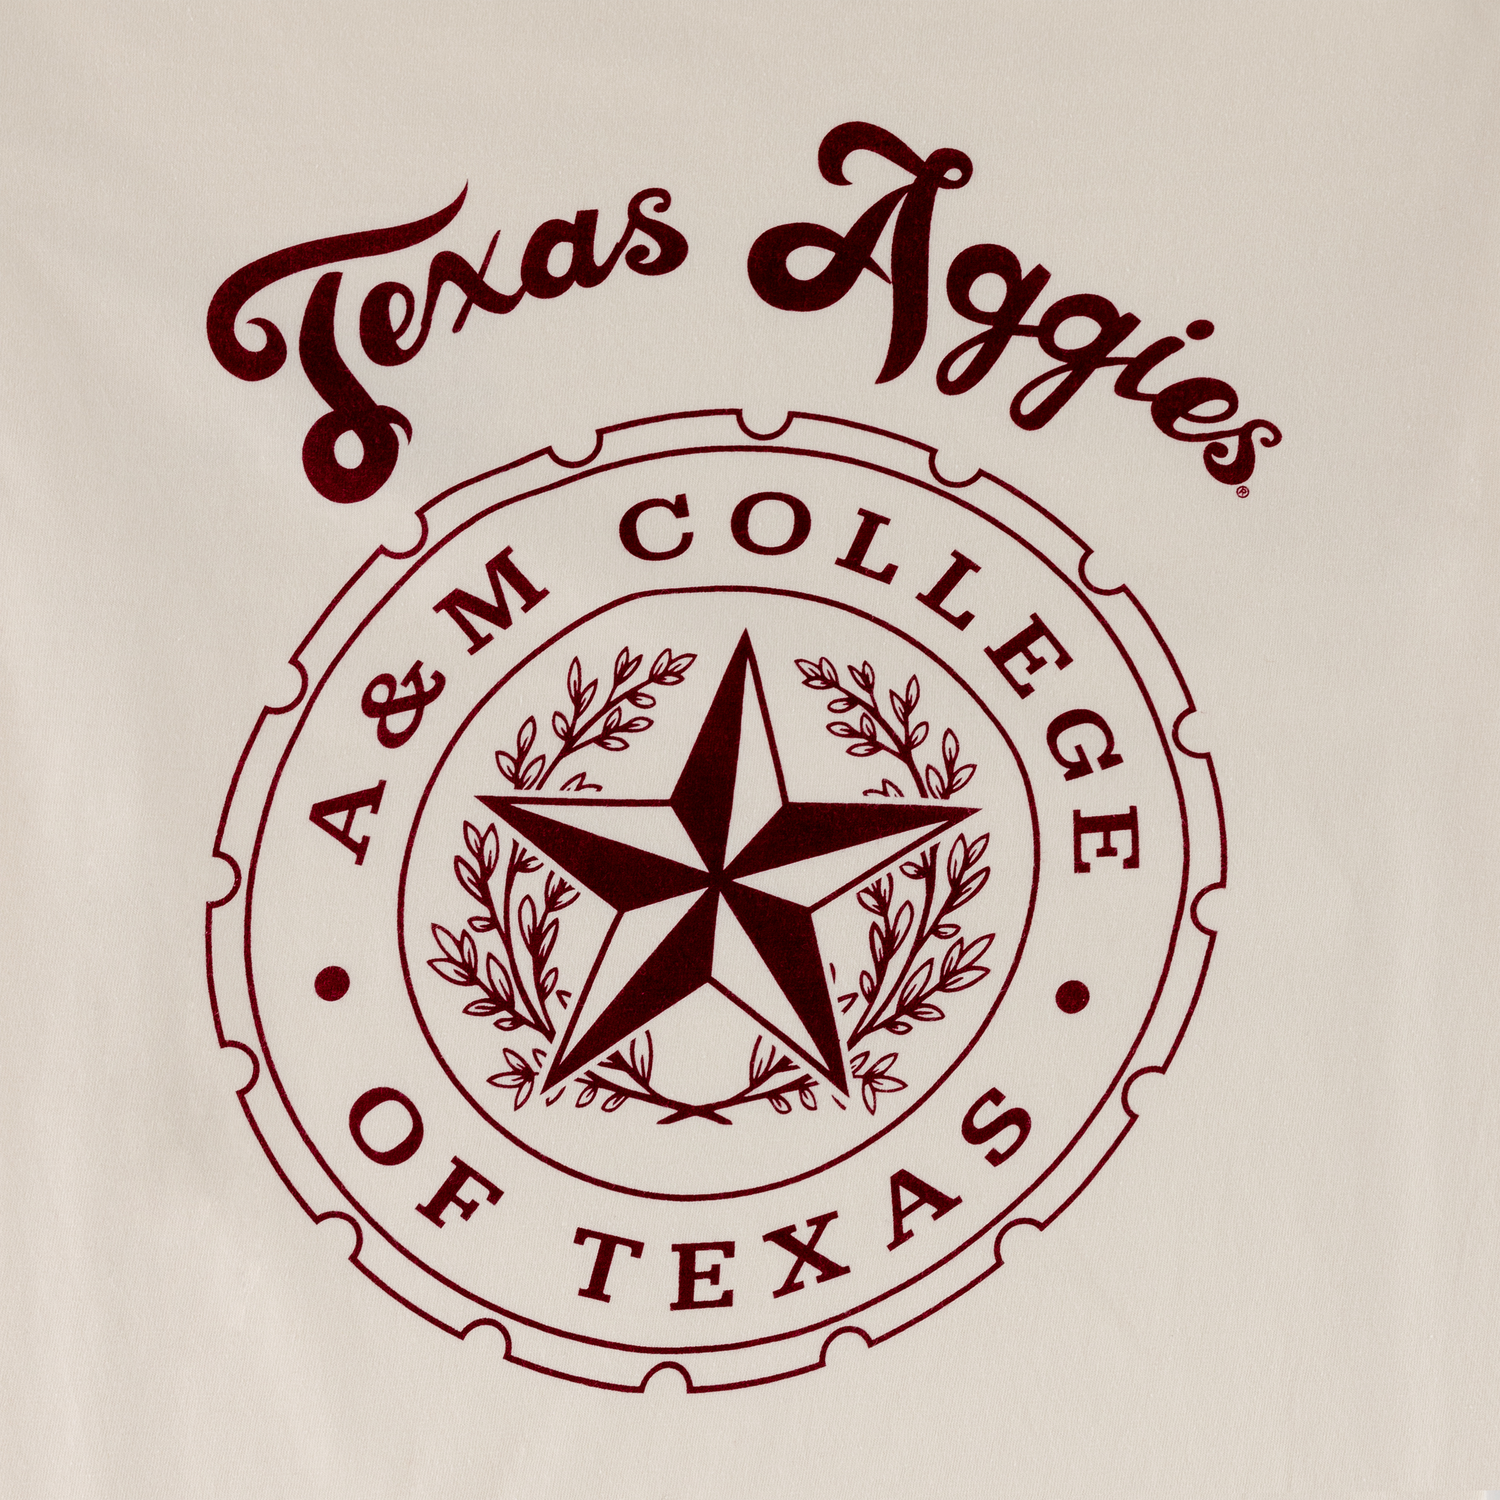 Texas A&M Aggies College of Texas